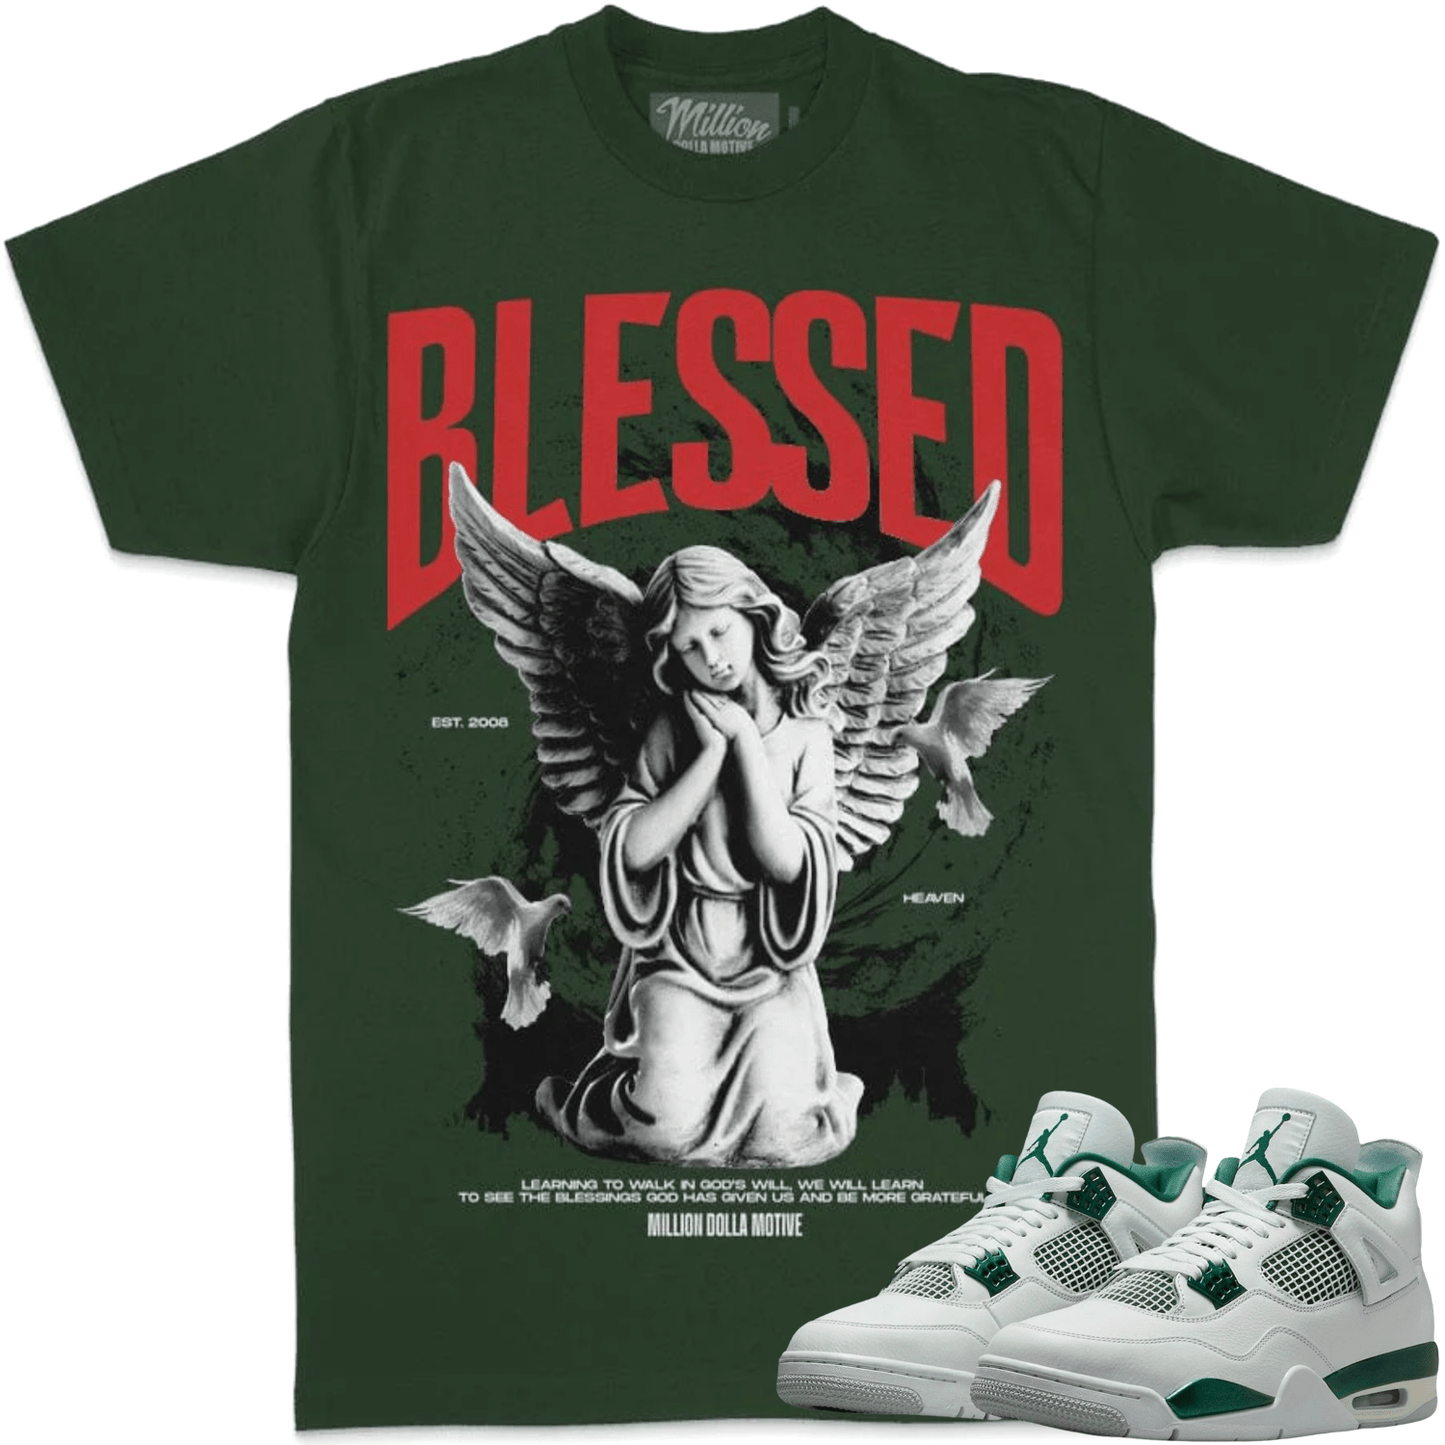 Oxidized Green 4s Shirt - Jordan 4 Oxidized Sneaker Tees - Angel 2.0